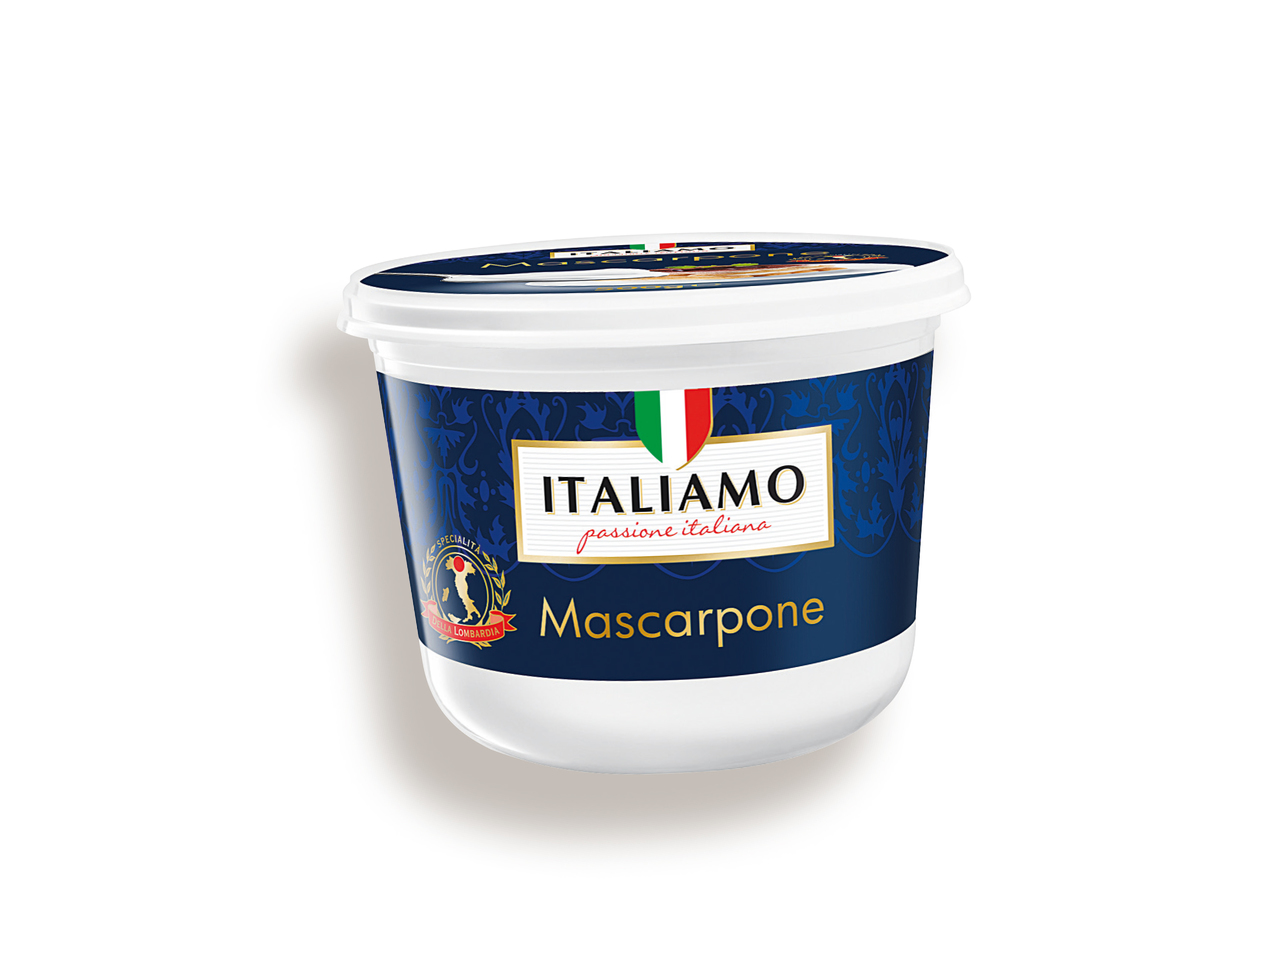 ITALIAMO(R) Mascarpone